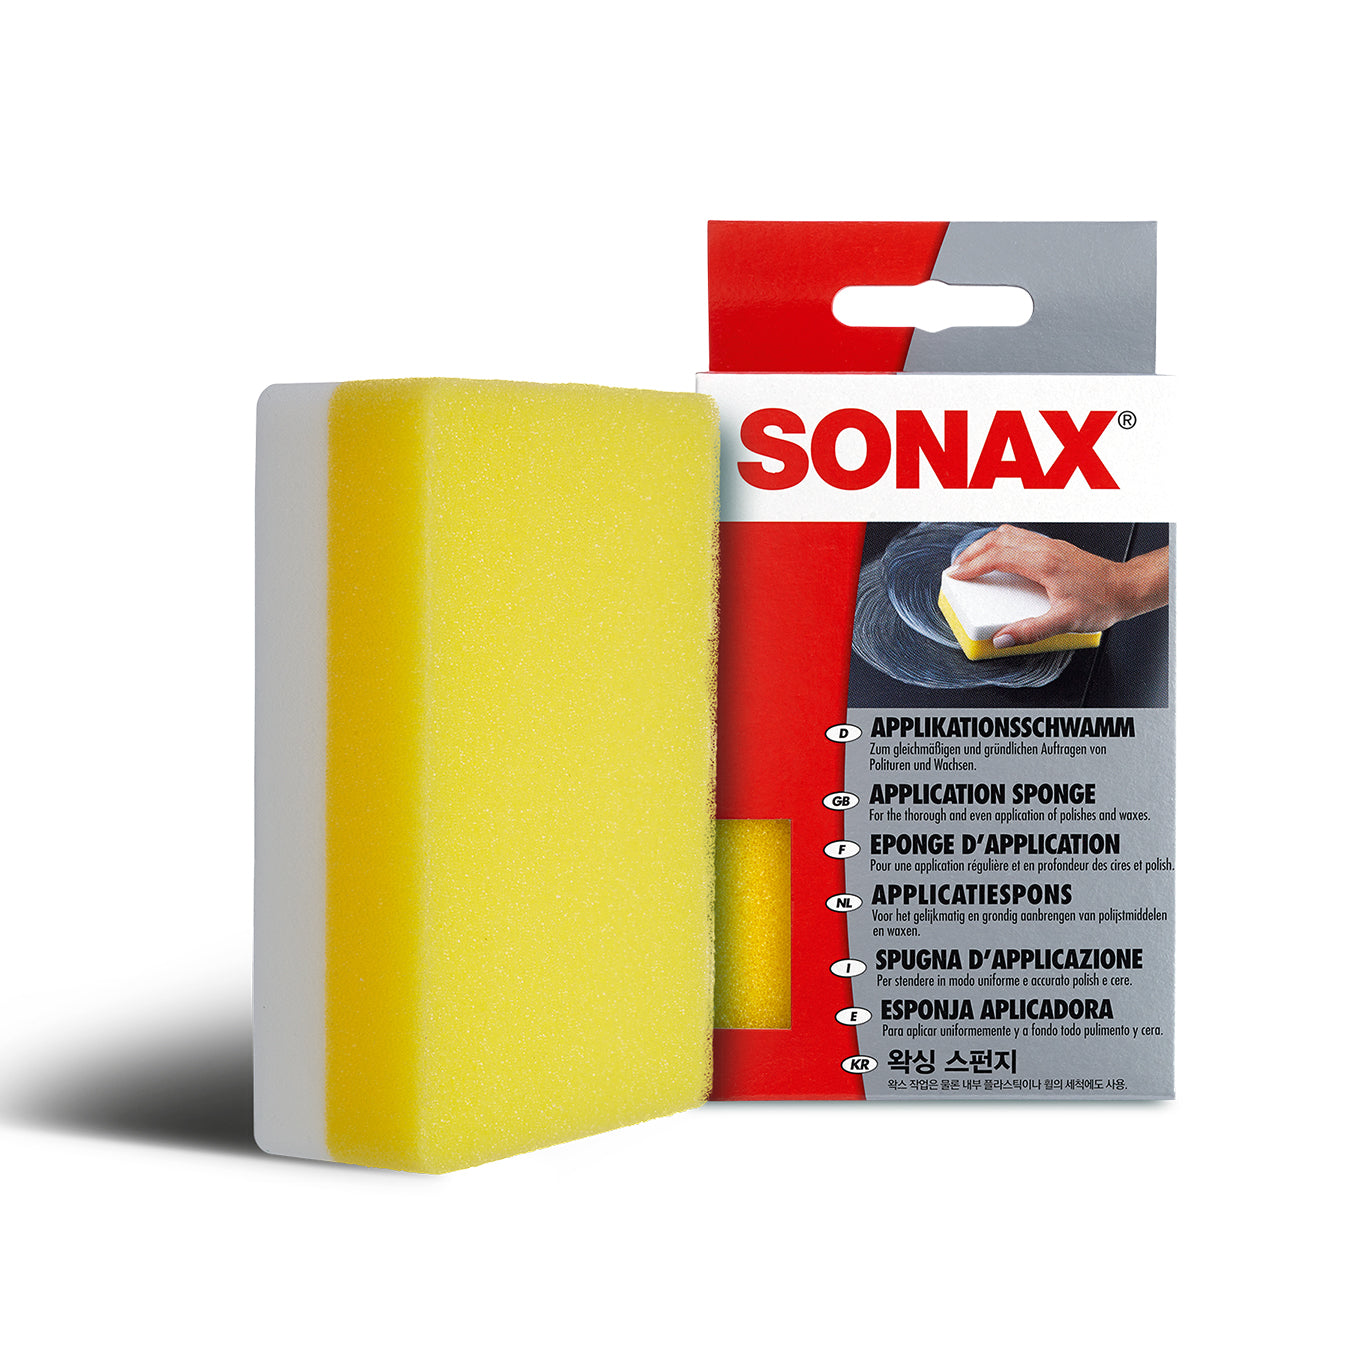 SONAX Application Sponge for Waxing